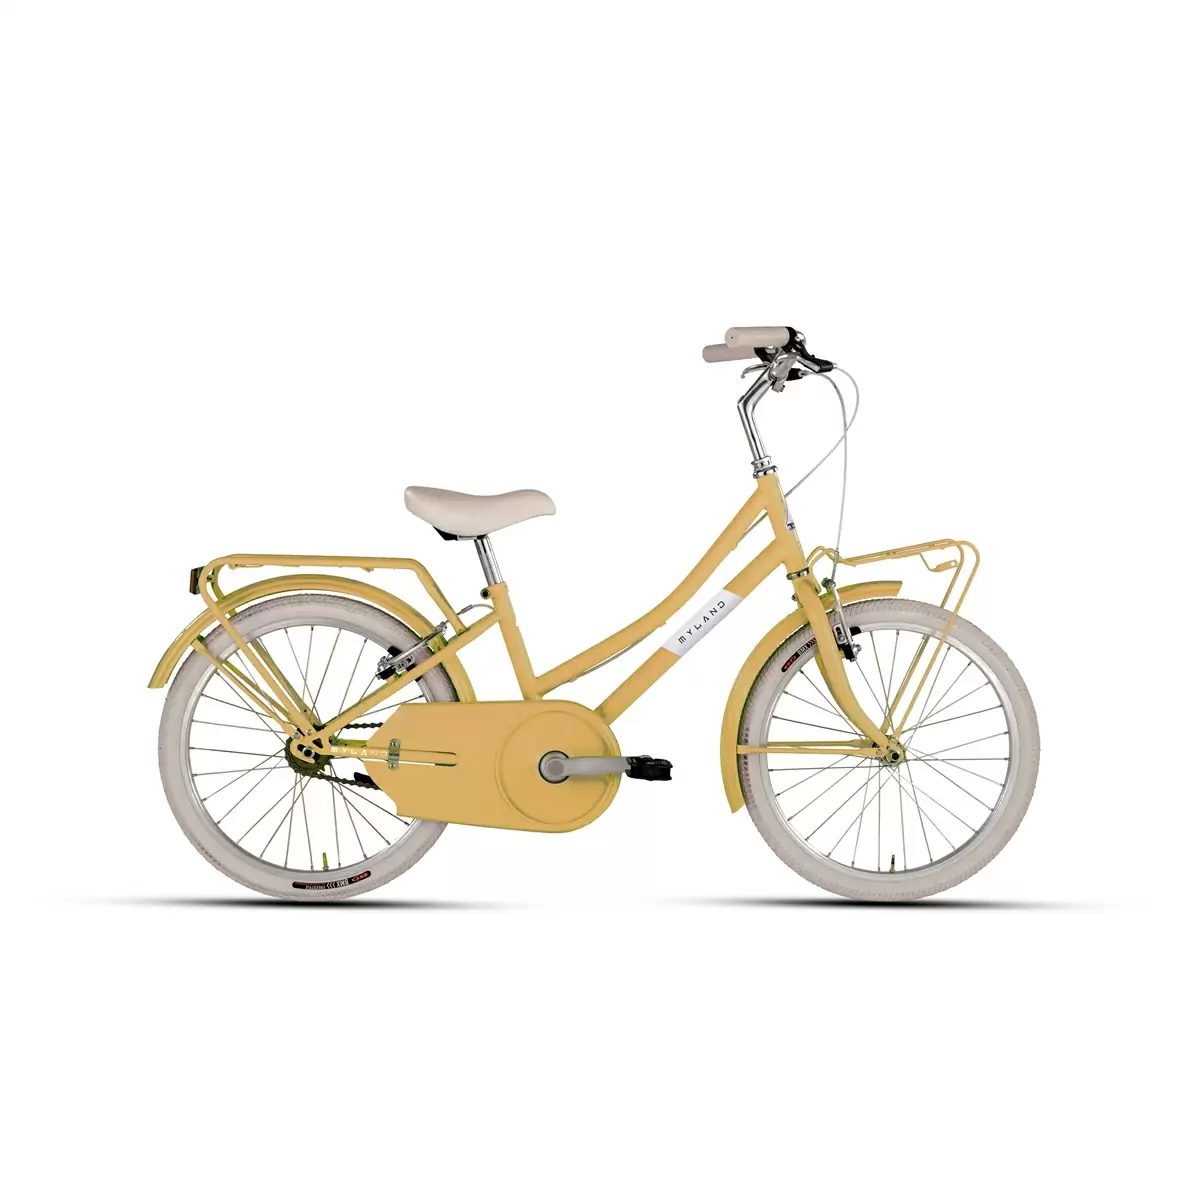 Myland b02000005 bicicleta kid 201 nina 20 6 8 anos 1s amarillo Bicic